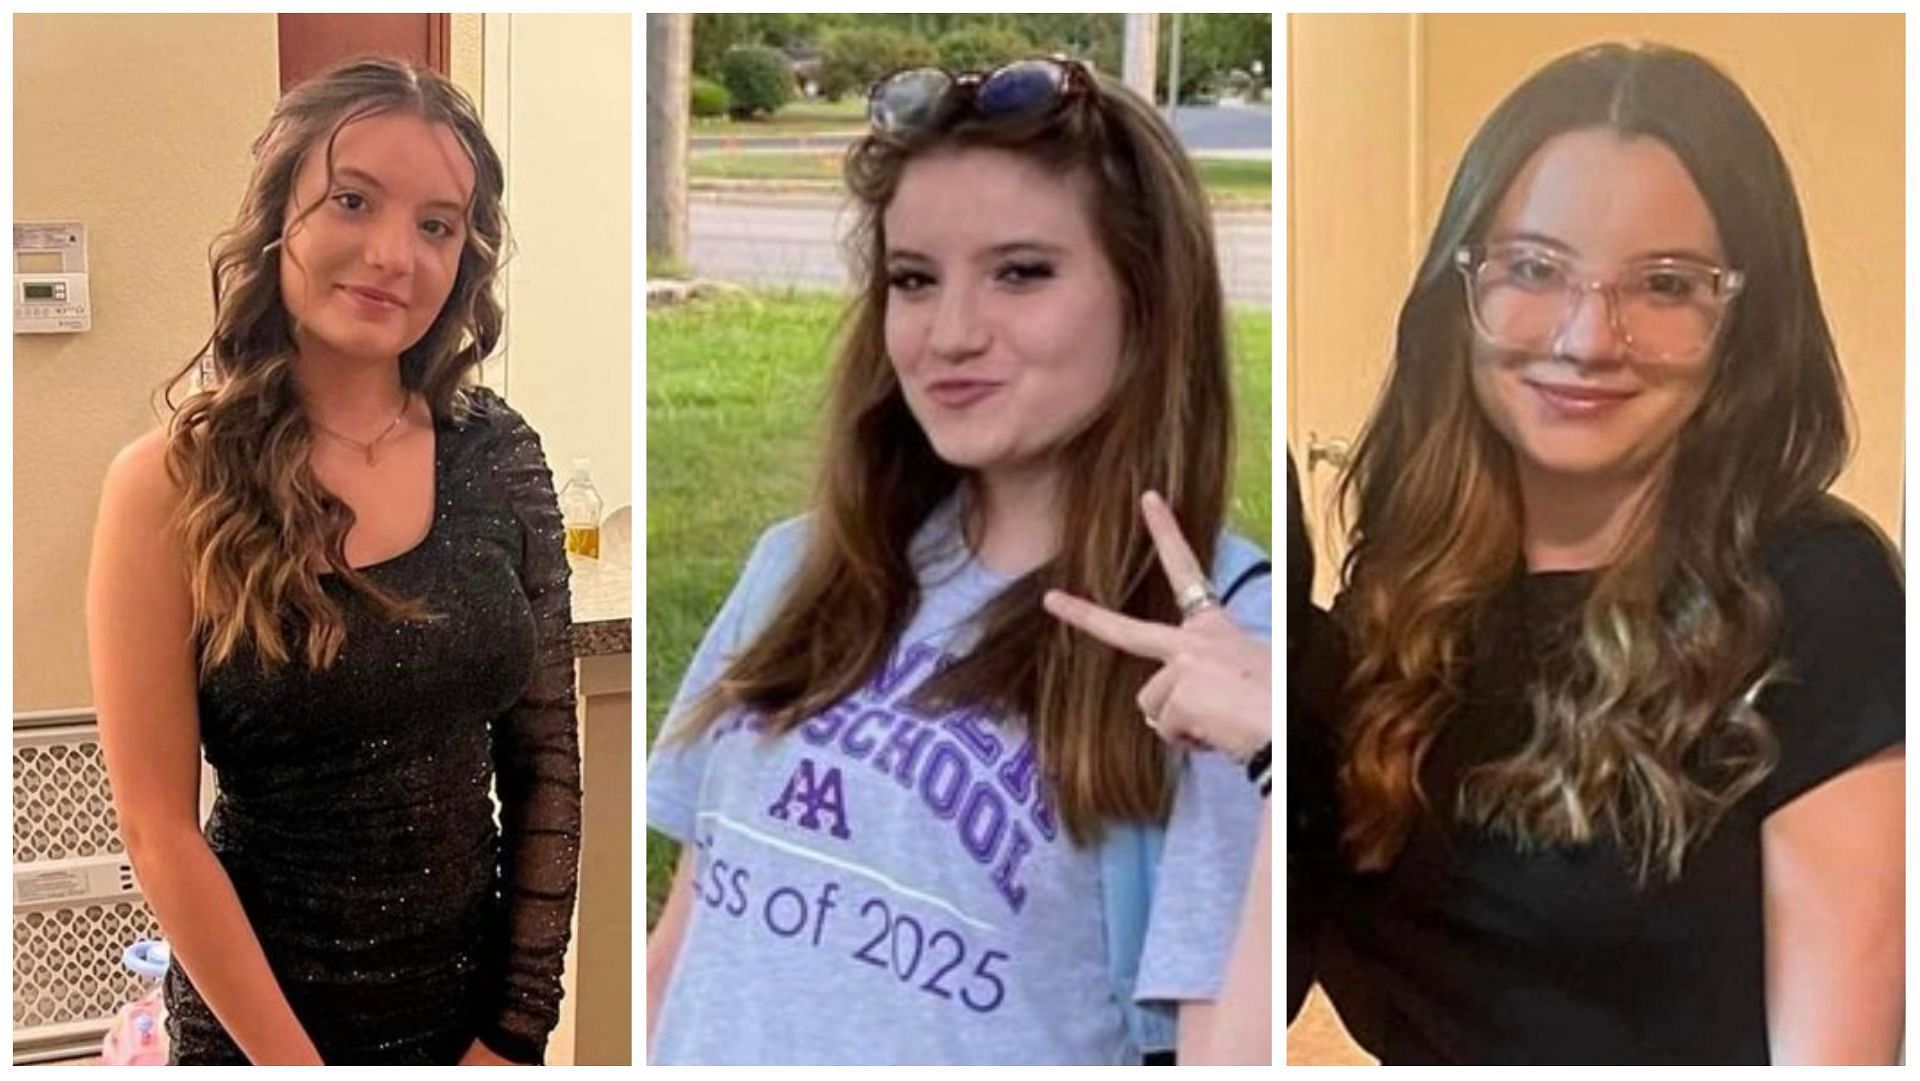 Missing Michigan teenager Adriana Davidson was found dead on Monday, (Images via Washtenaw Sheriff/Facebook)